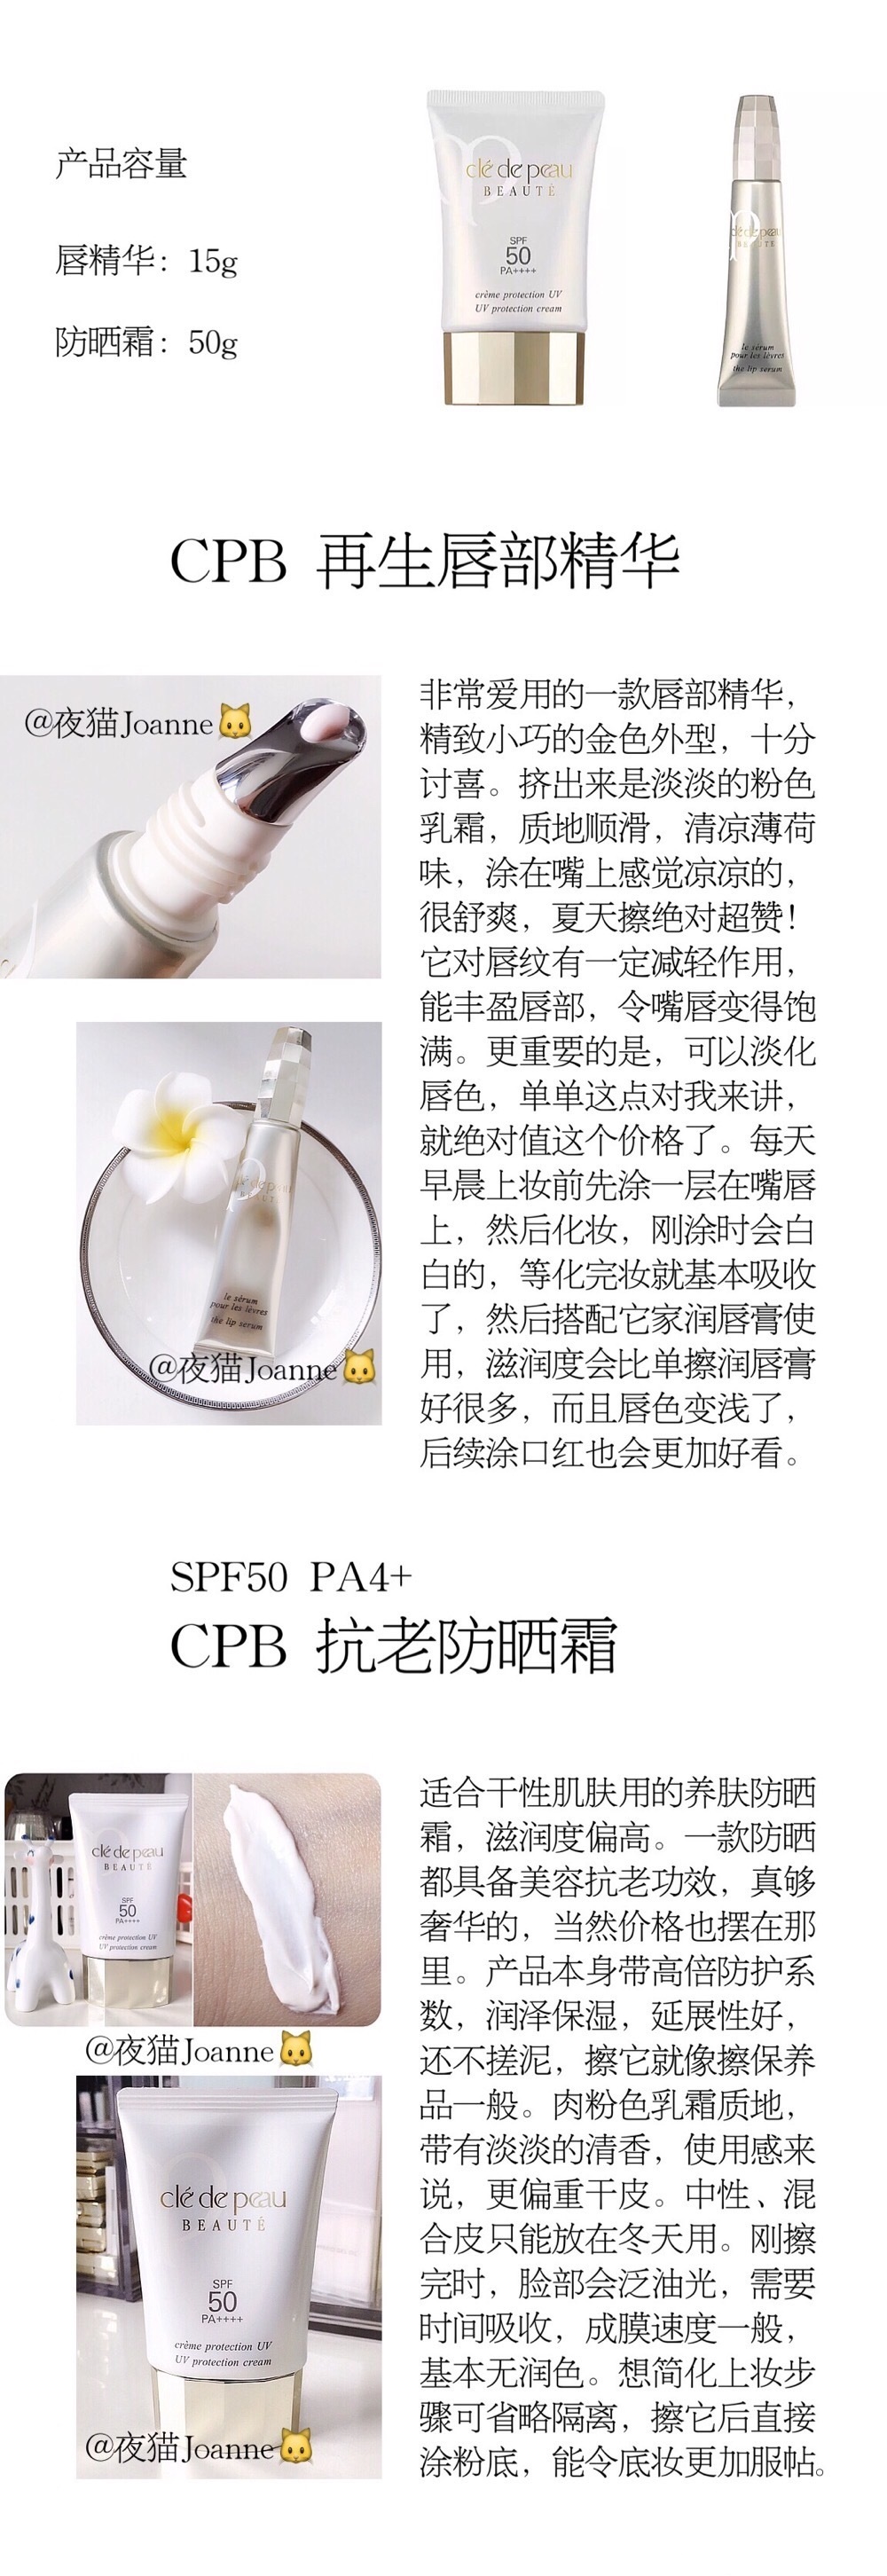 CPB肌肤之钥基础线护肤产品使用心得合集